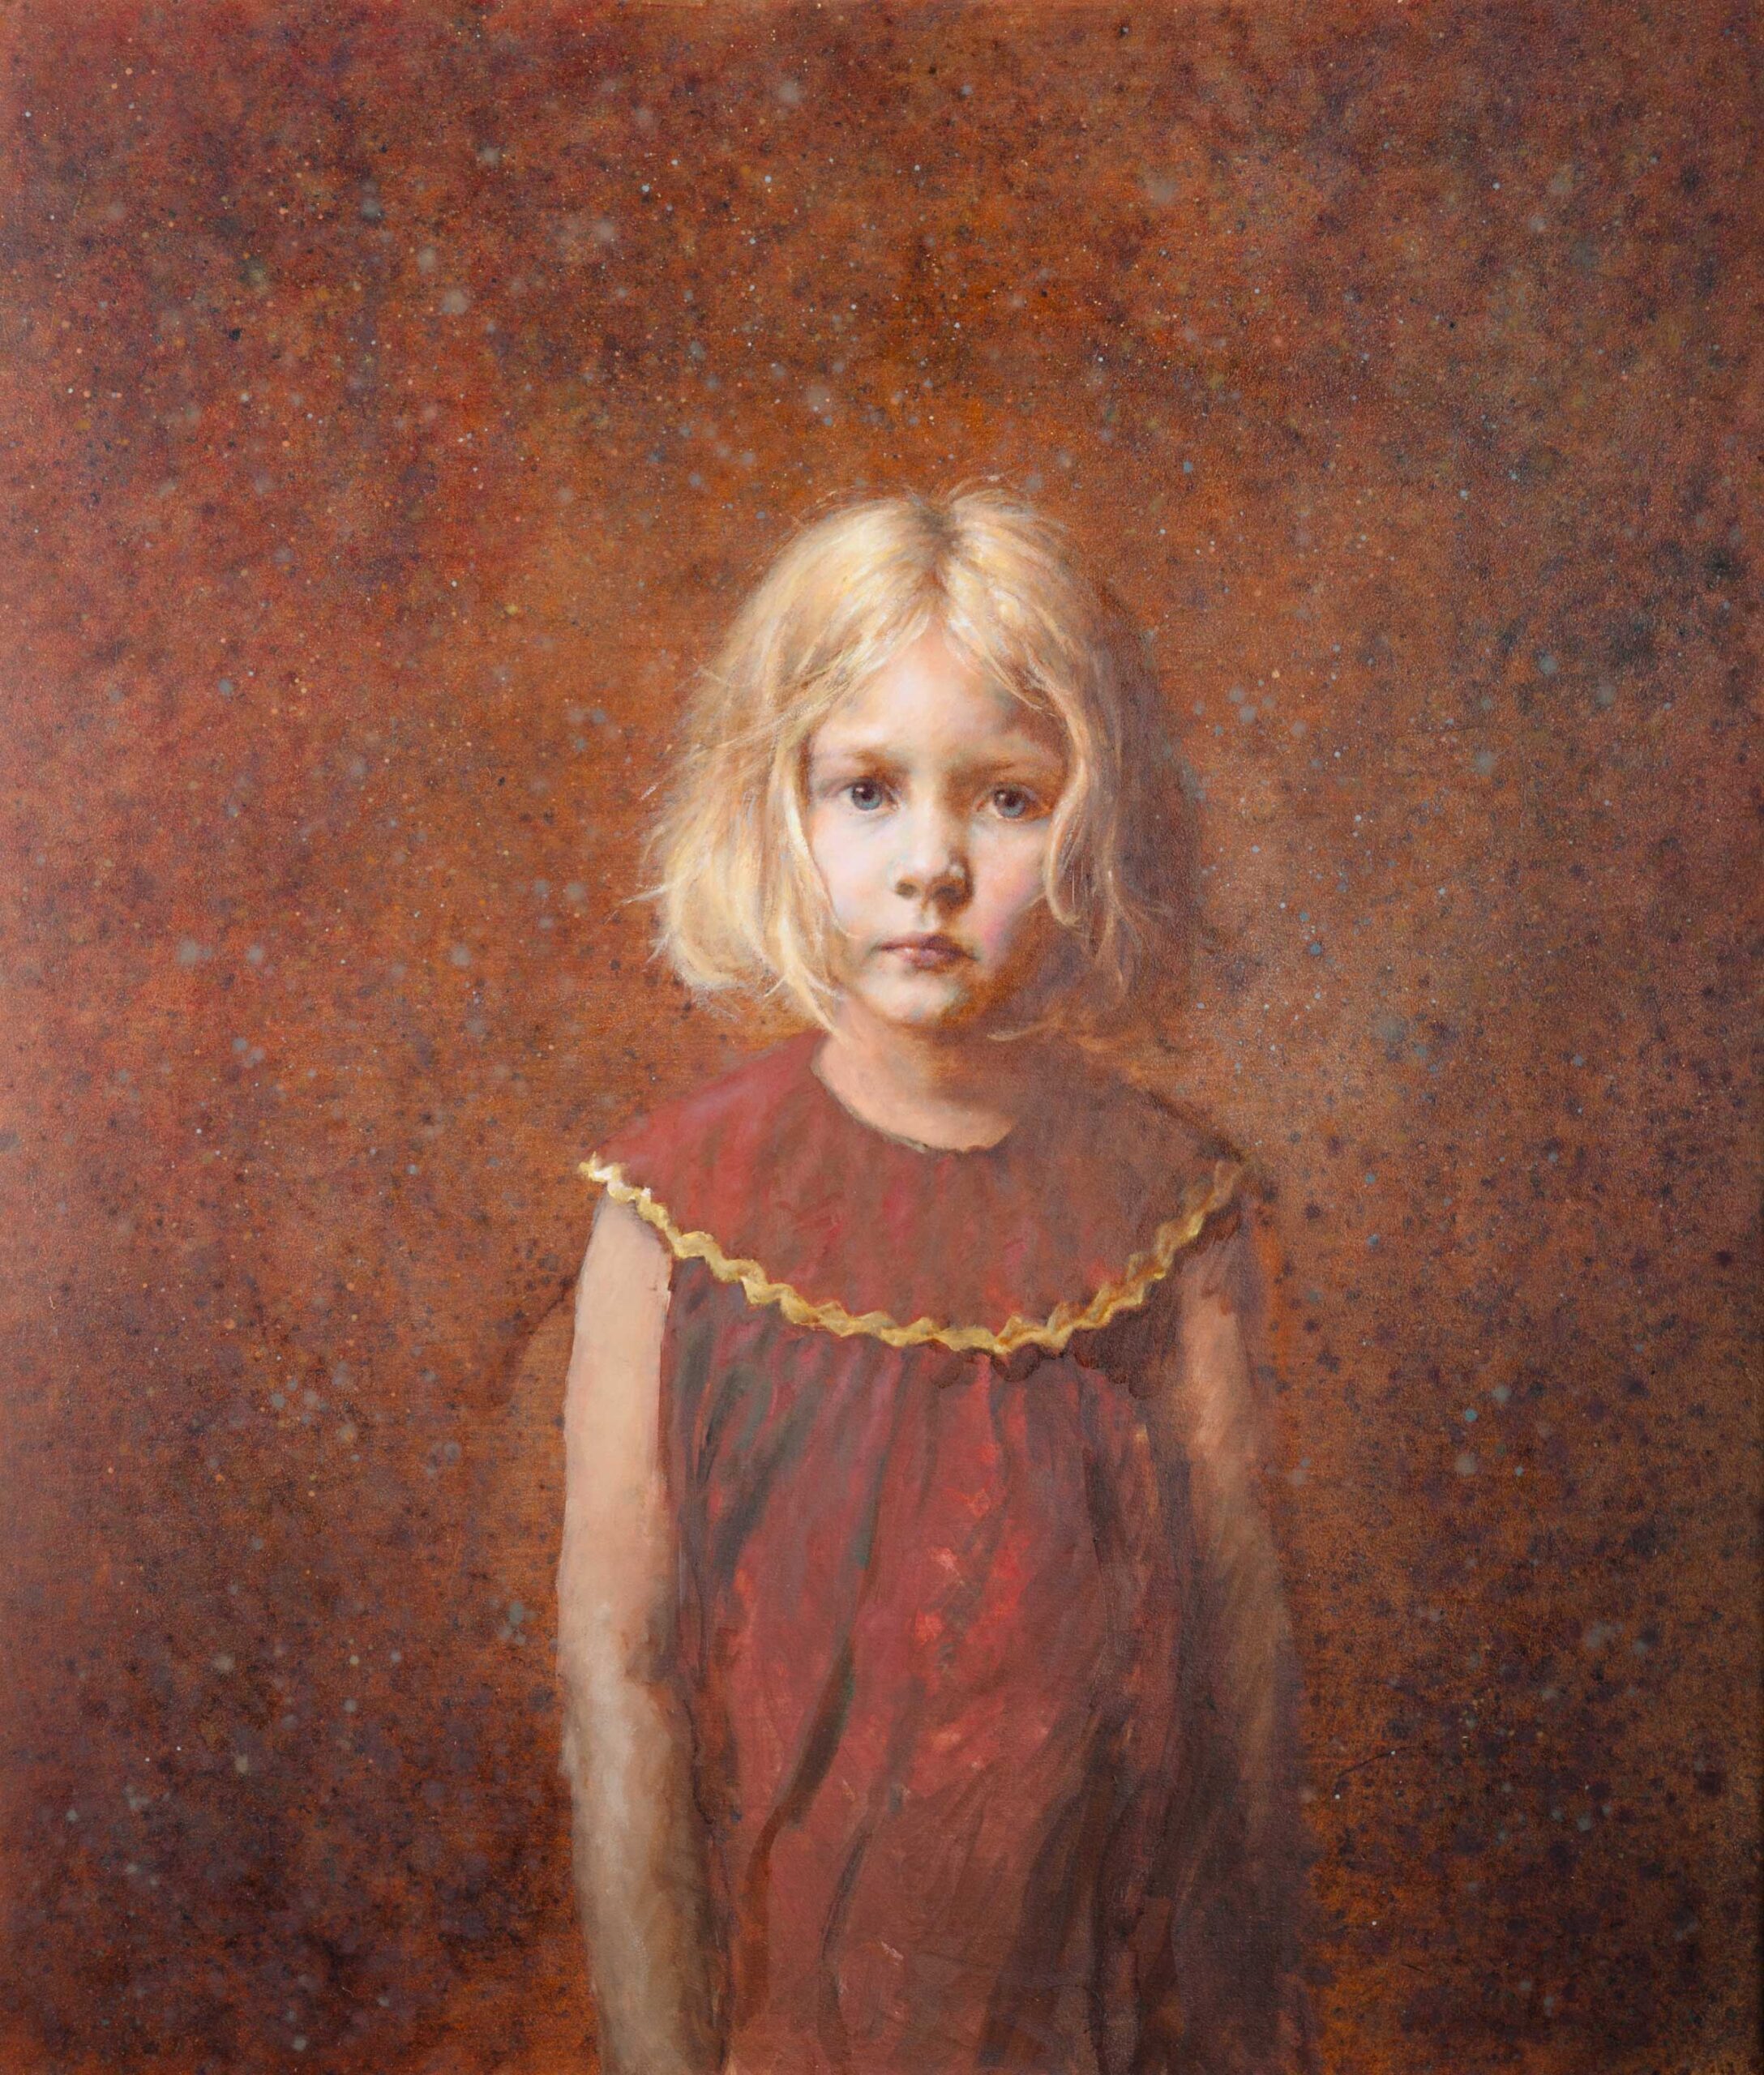 Seth Havercamp, "Essie’s Yellow Ribbon,"31 x 24 inches, Oil on linen